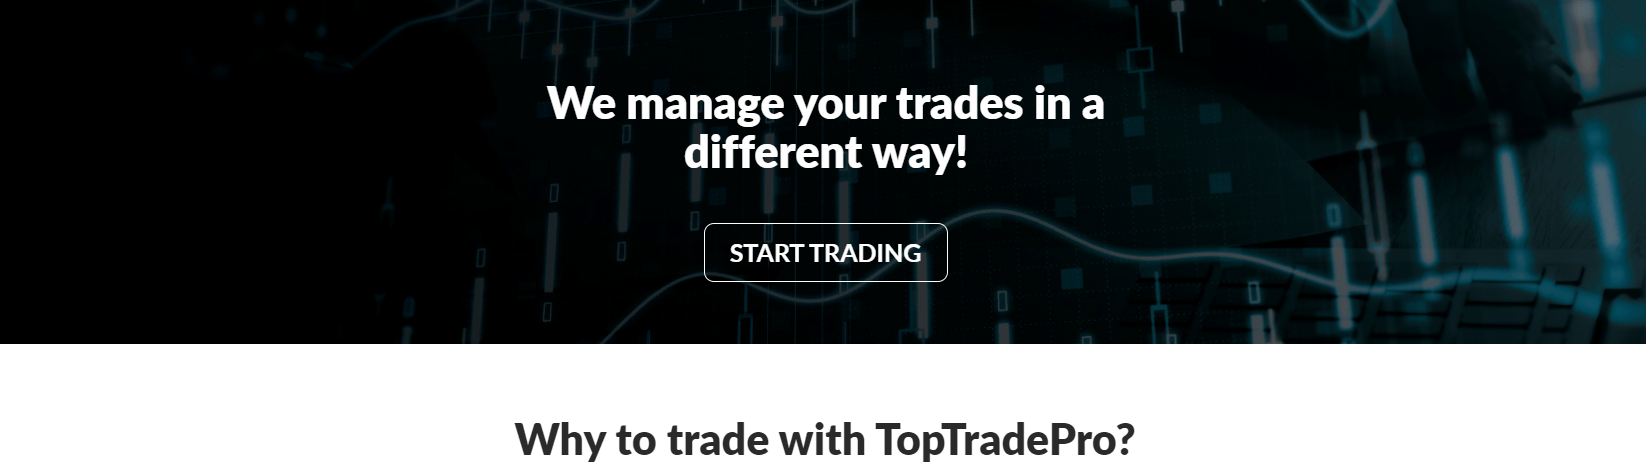 TopTraderPro Managing